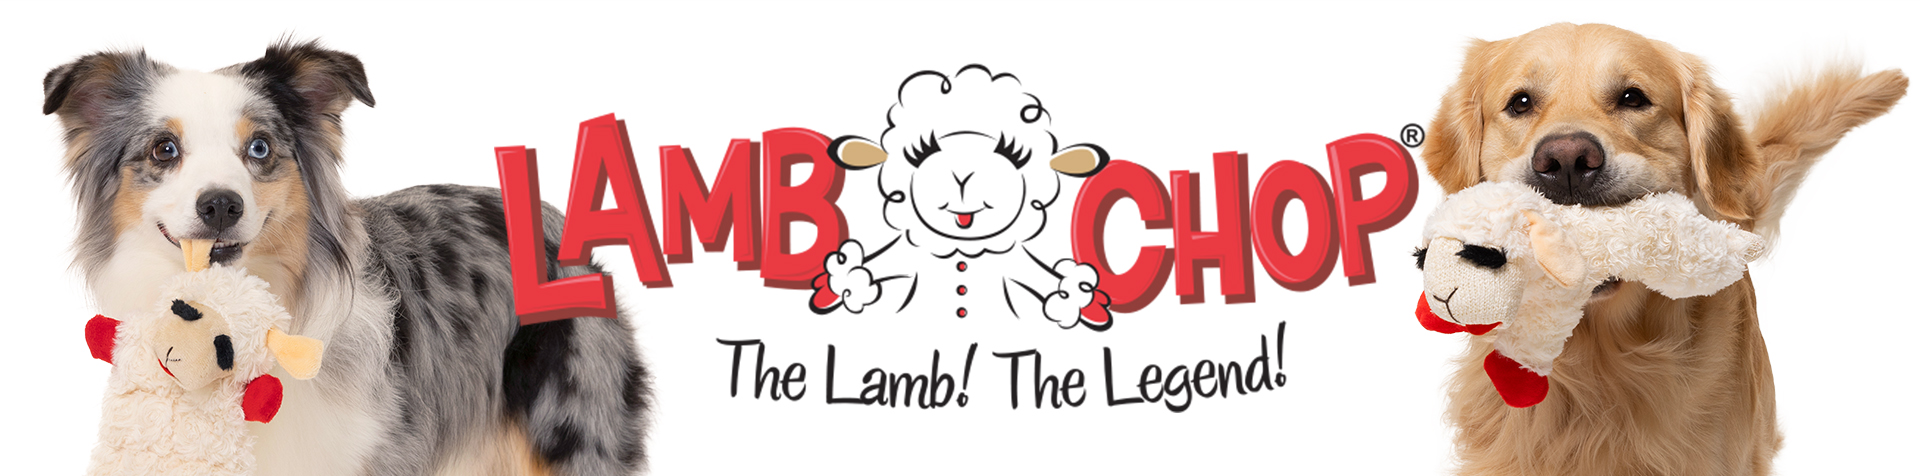 Lamb Chop<sup>®</sup> Knobby Noggin